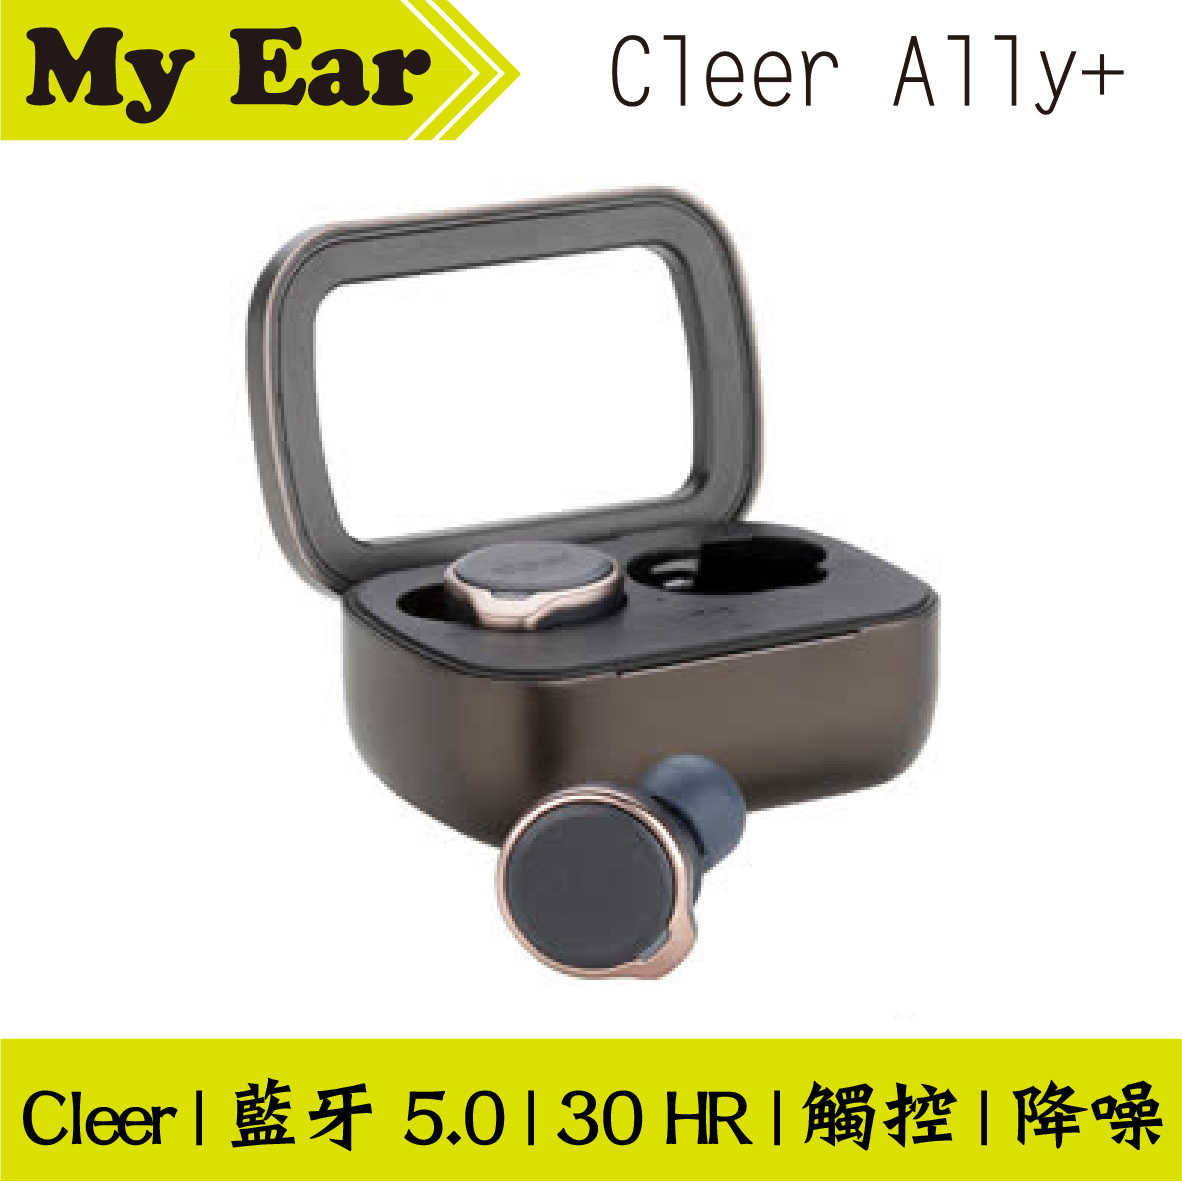 Cleer Ally+ 海軍藍 真無線 快充 降噪 麥克風 立體聲 藍芽 耳機 | My Ear 耳機專門店